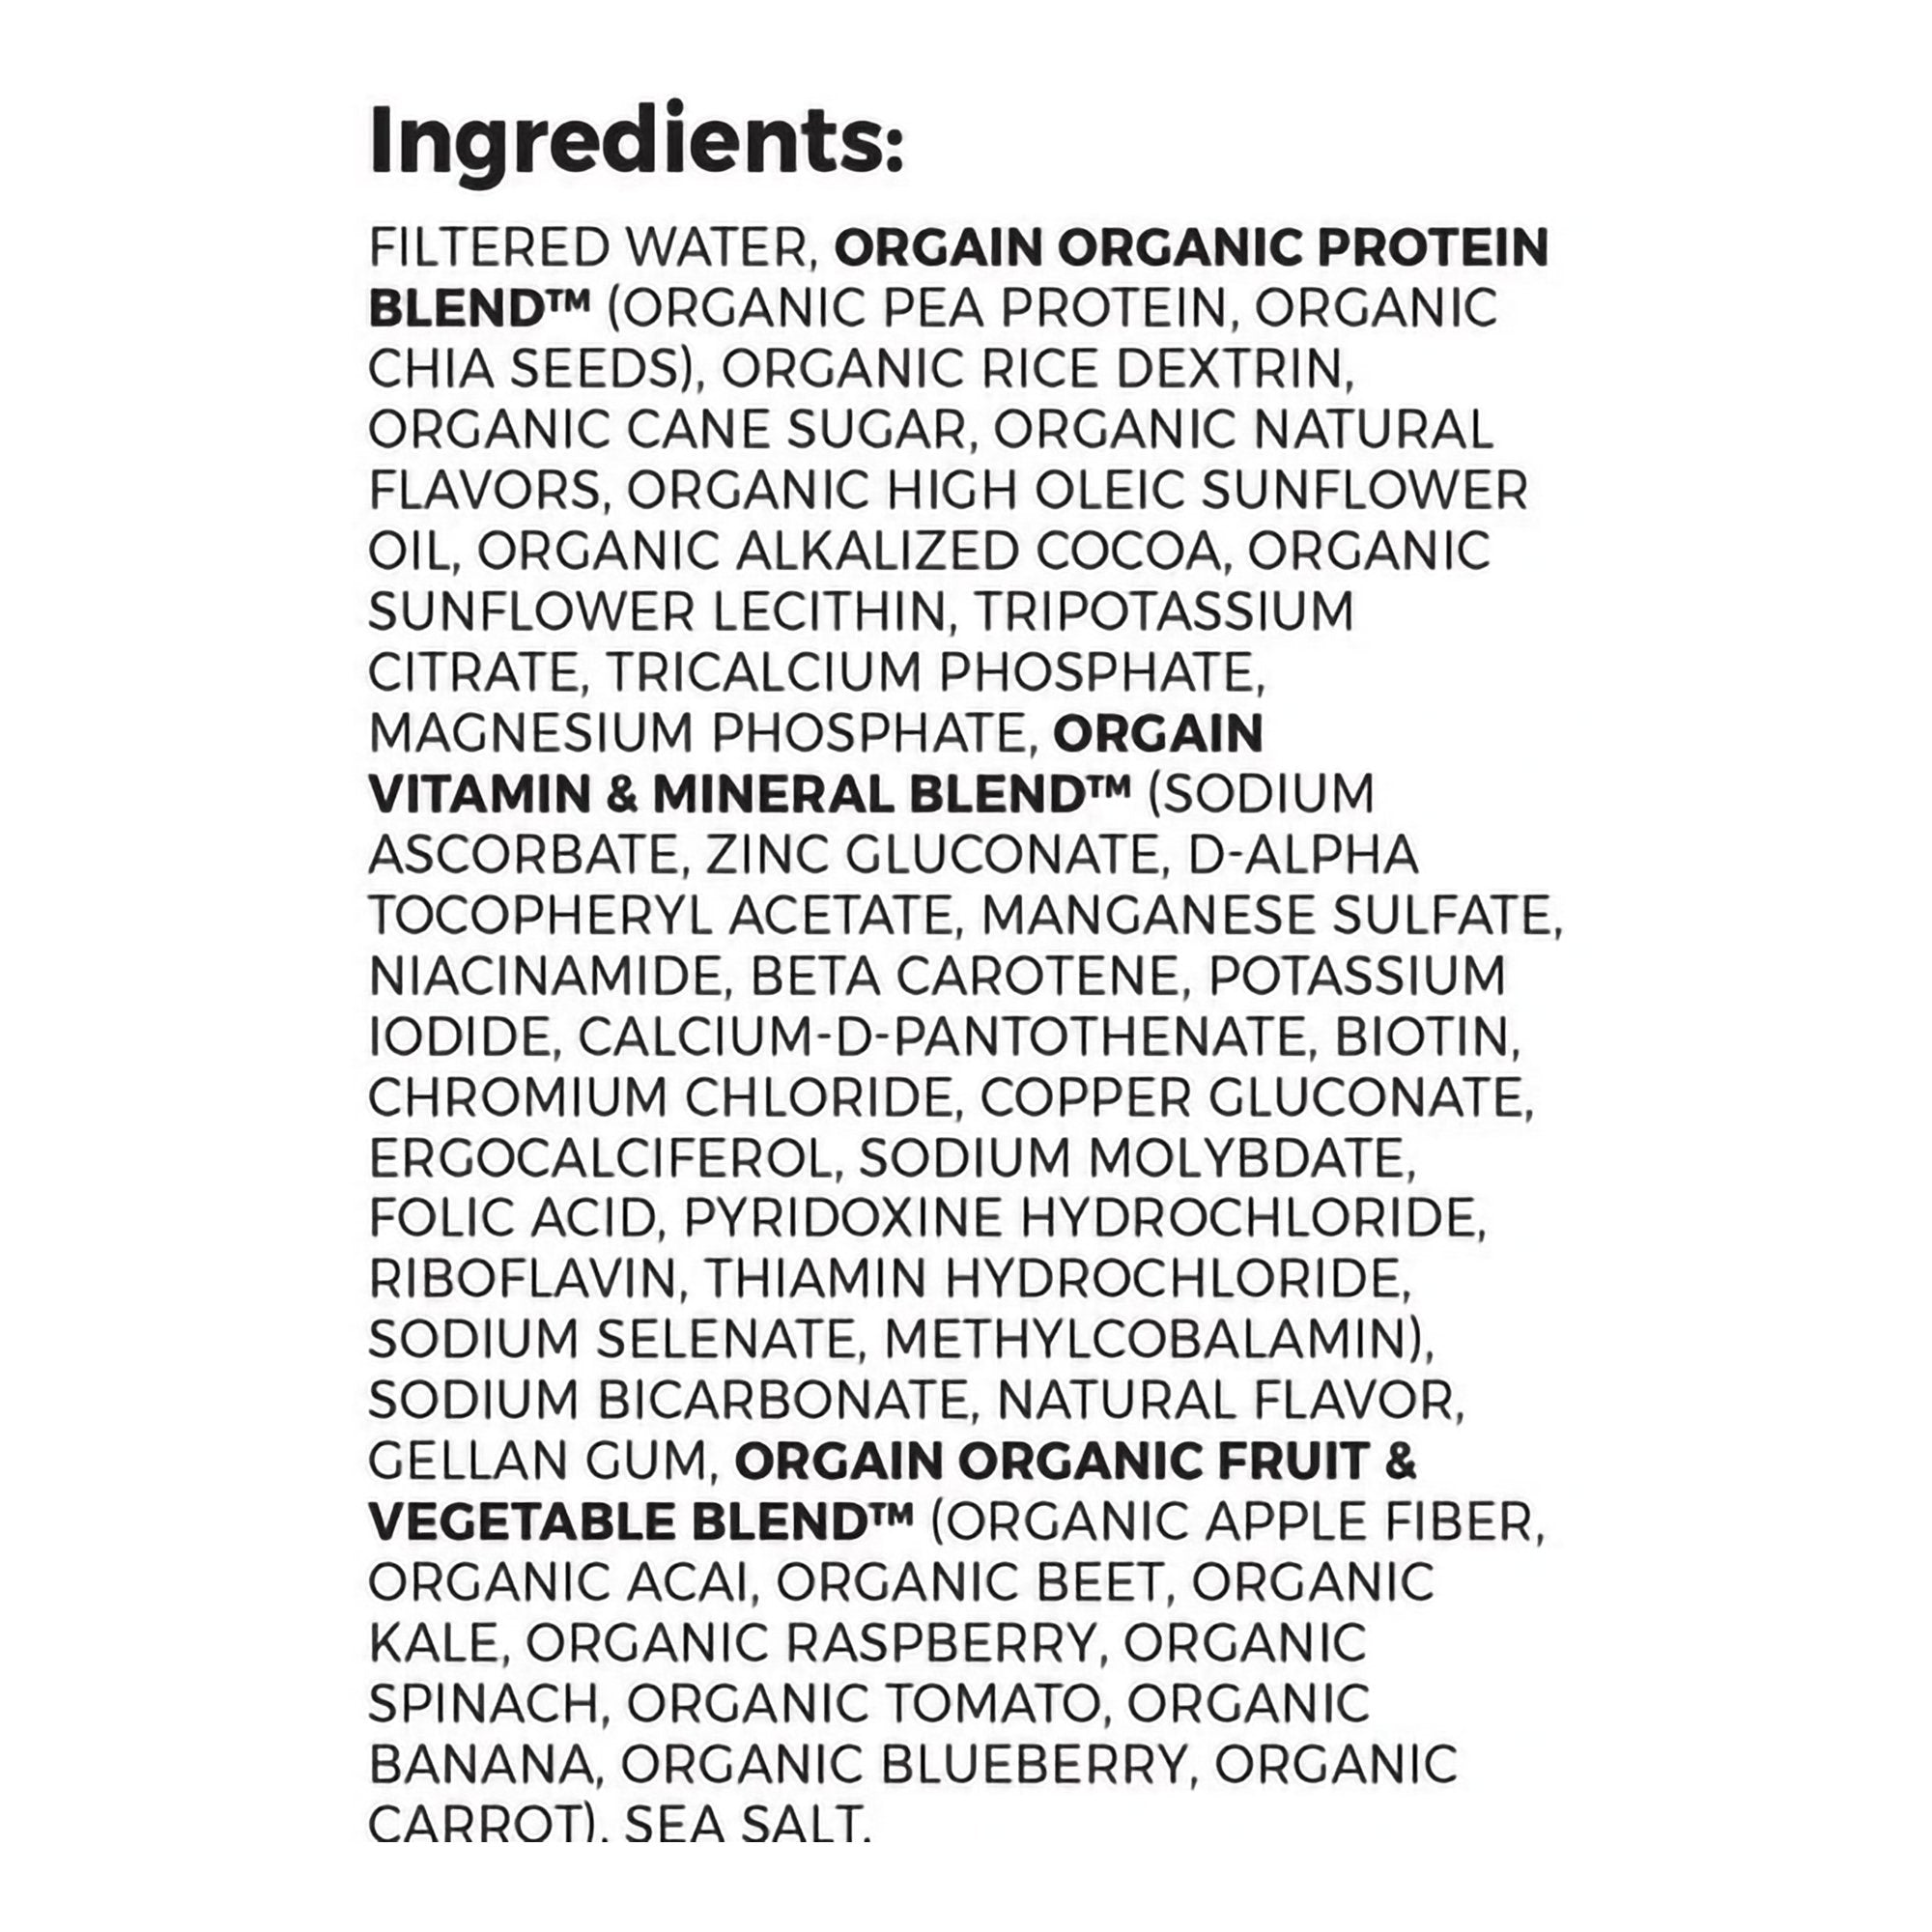 Oral Supplement Organic Nutrition Vegan Smooth Chocolate Flavor Liquid 11 oz. Carton